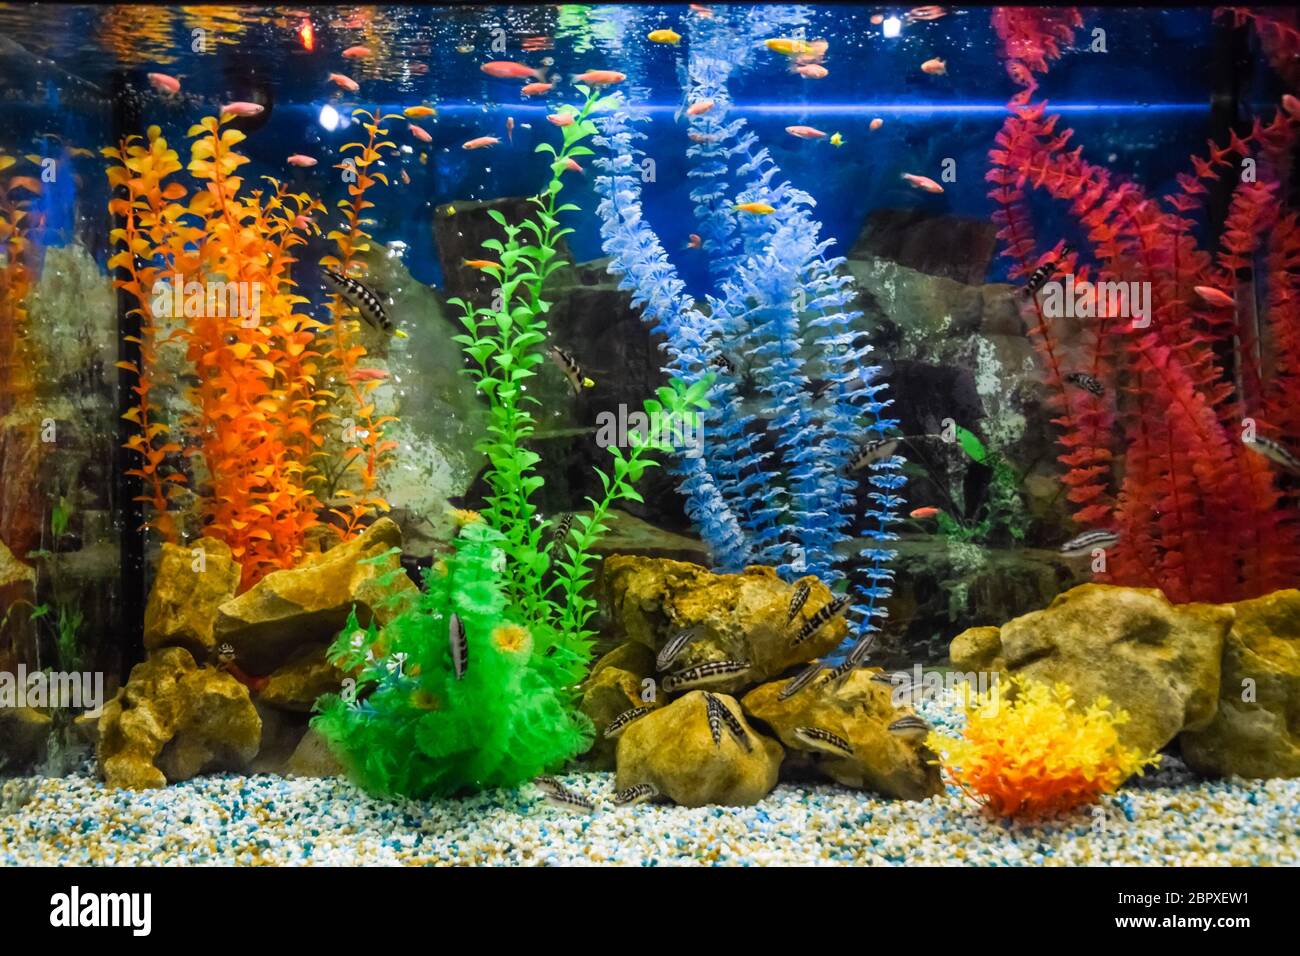 Wall mounted aquarium with tropical fish and algae. Stock Photo